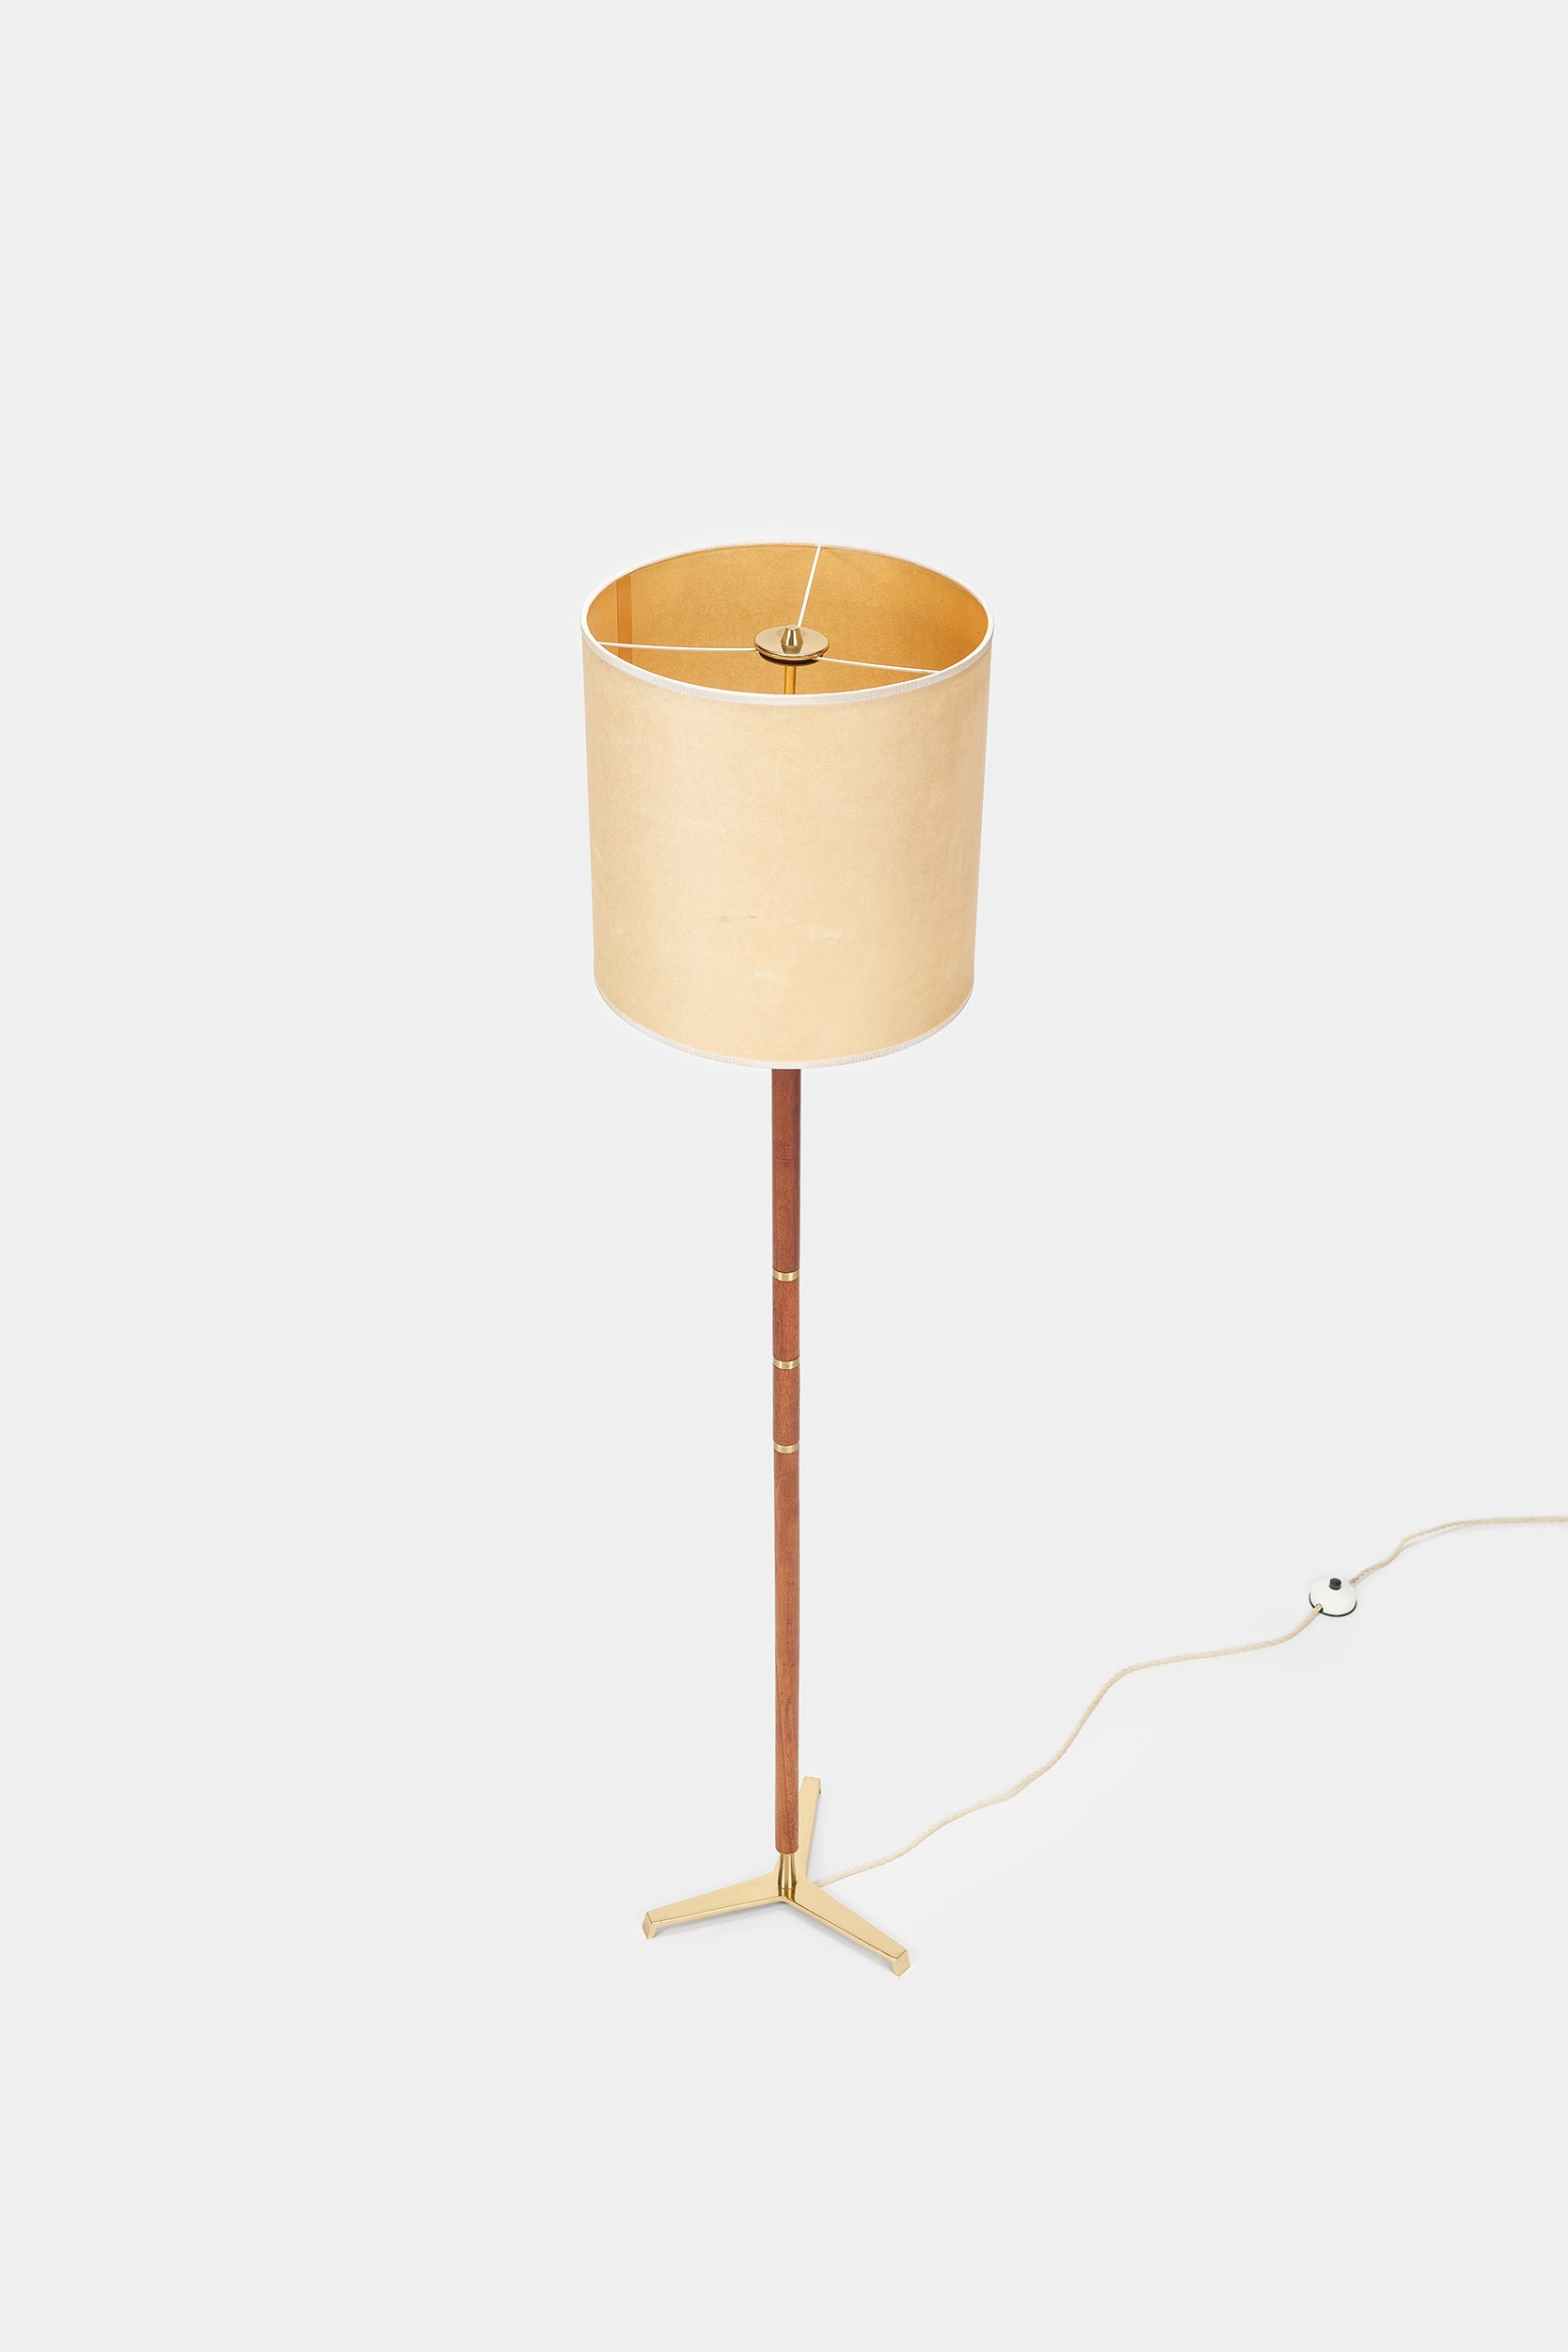 Floor Lamp, Teak and Brass, Switzerland, 60s